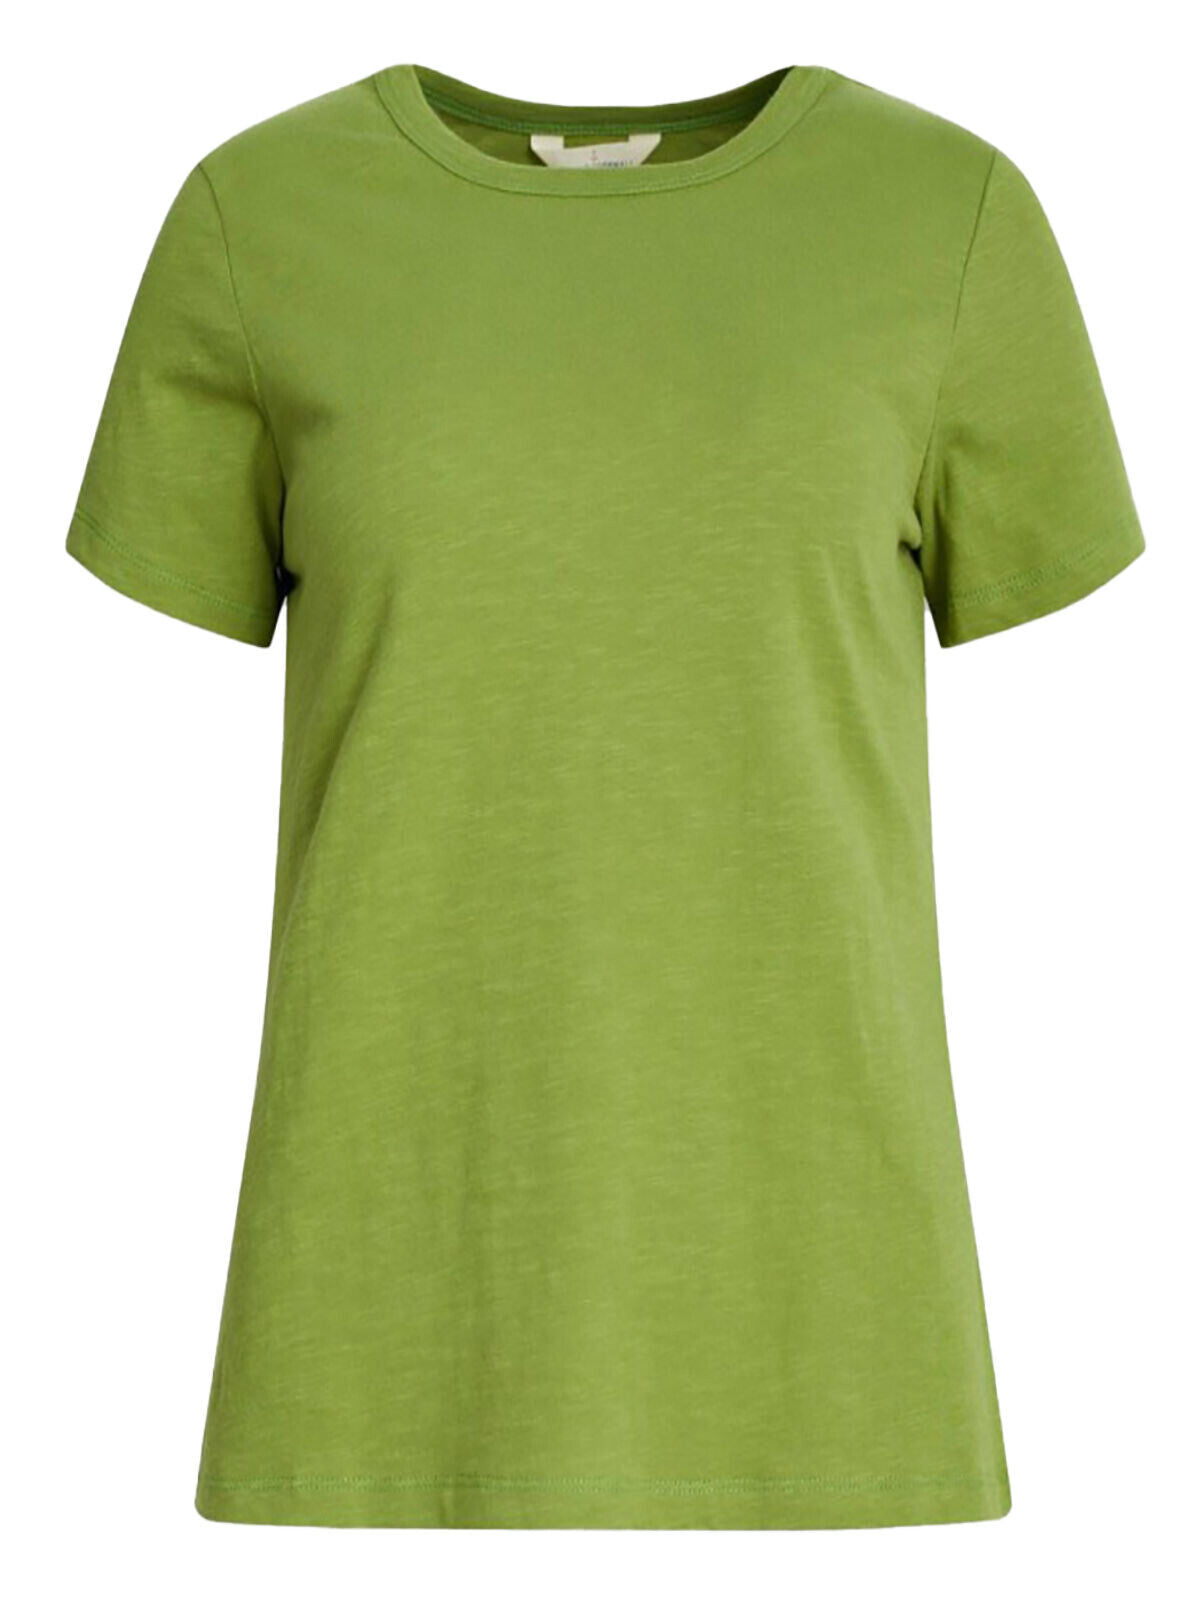 EX SEASALT Dill Green Reflection T-Shirt Sizes 12, 14, 16, 18, 20